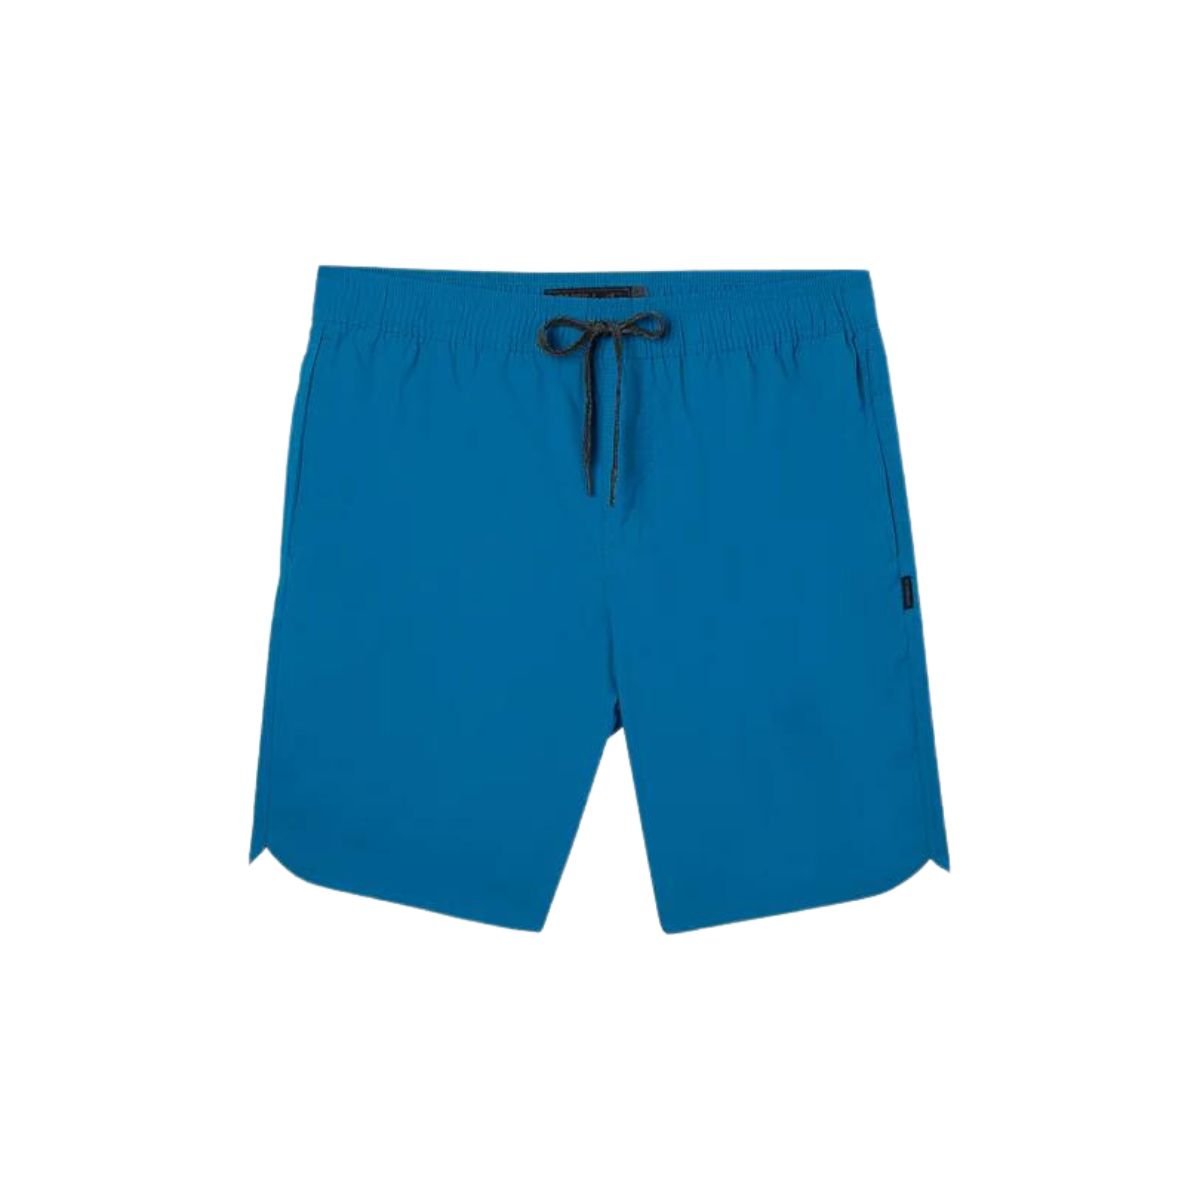 O'Neill TRVLR Camino 18" Hybrid Shorts in Bay Blue - BoardCo